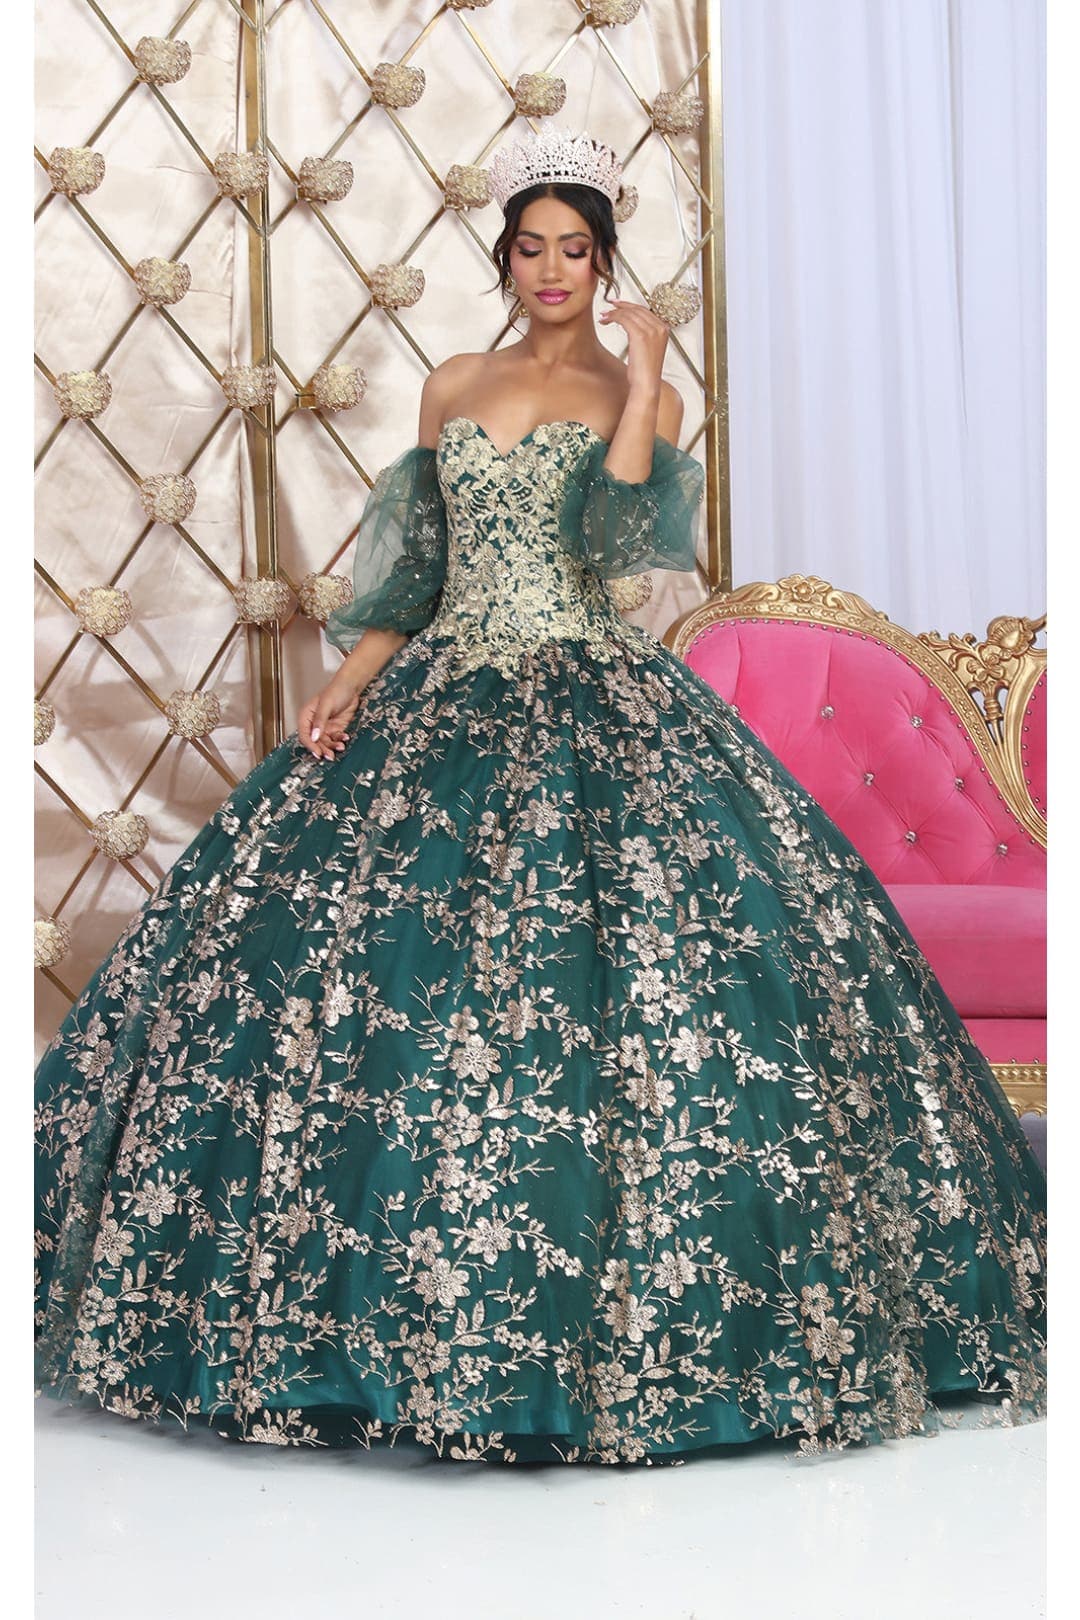 Layla K LK200 Detachable Puff Sleeves Sweetheart Glitter Quince Gown - HUNTER GREEN/GOLD / 4 - Dress